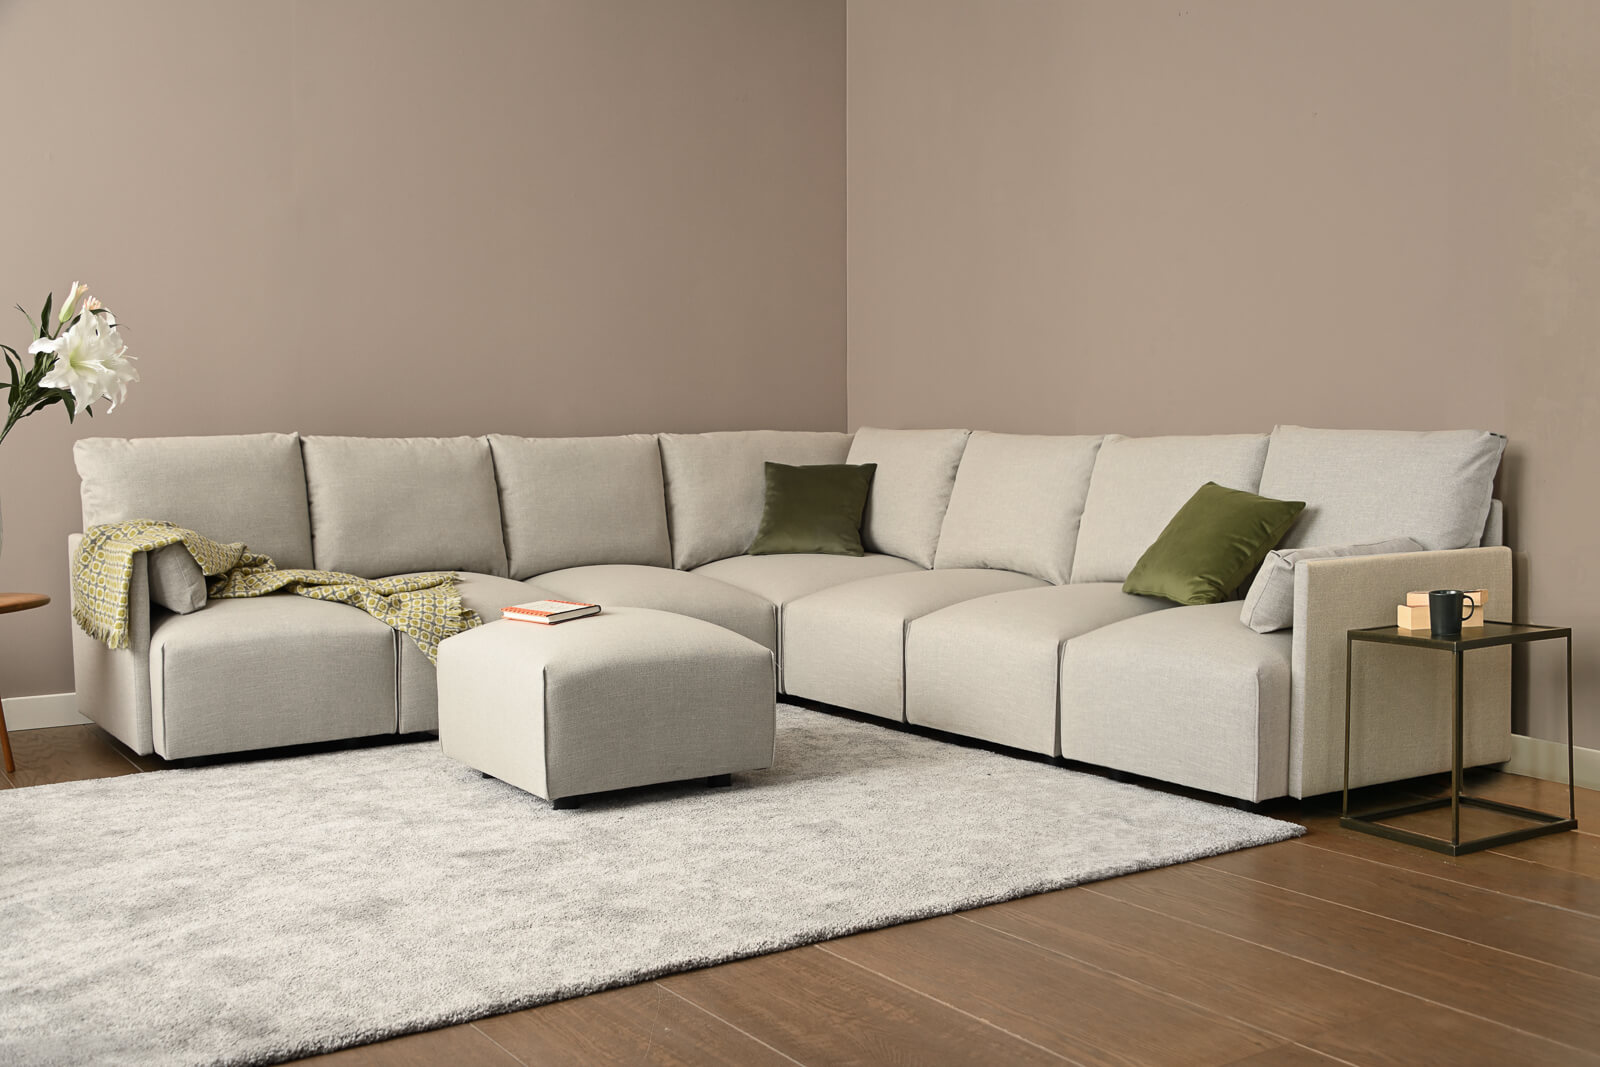 HB04-large-corner-sofa-footstool-3q-coconut-4x4-lifestyle